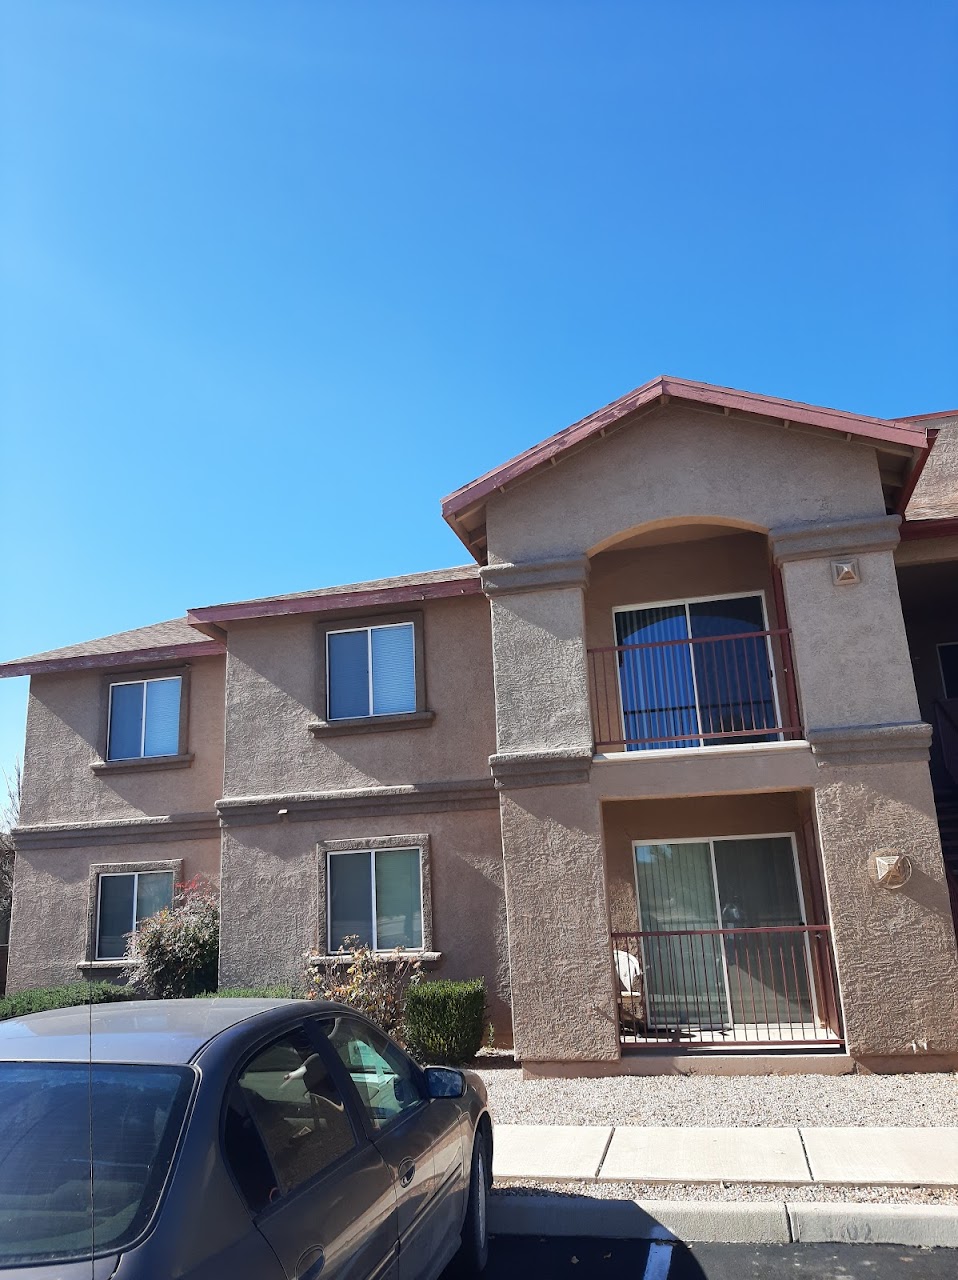 Photo of SONORA VISTA APTS. Affordable housing located at 1600 VAN BUREN AVE DOUGLAS, AZ 85607